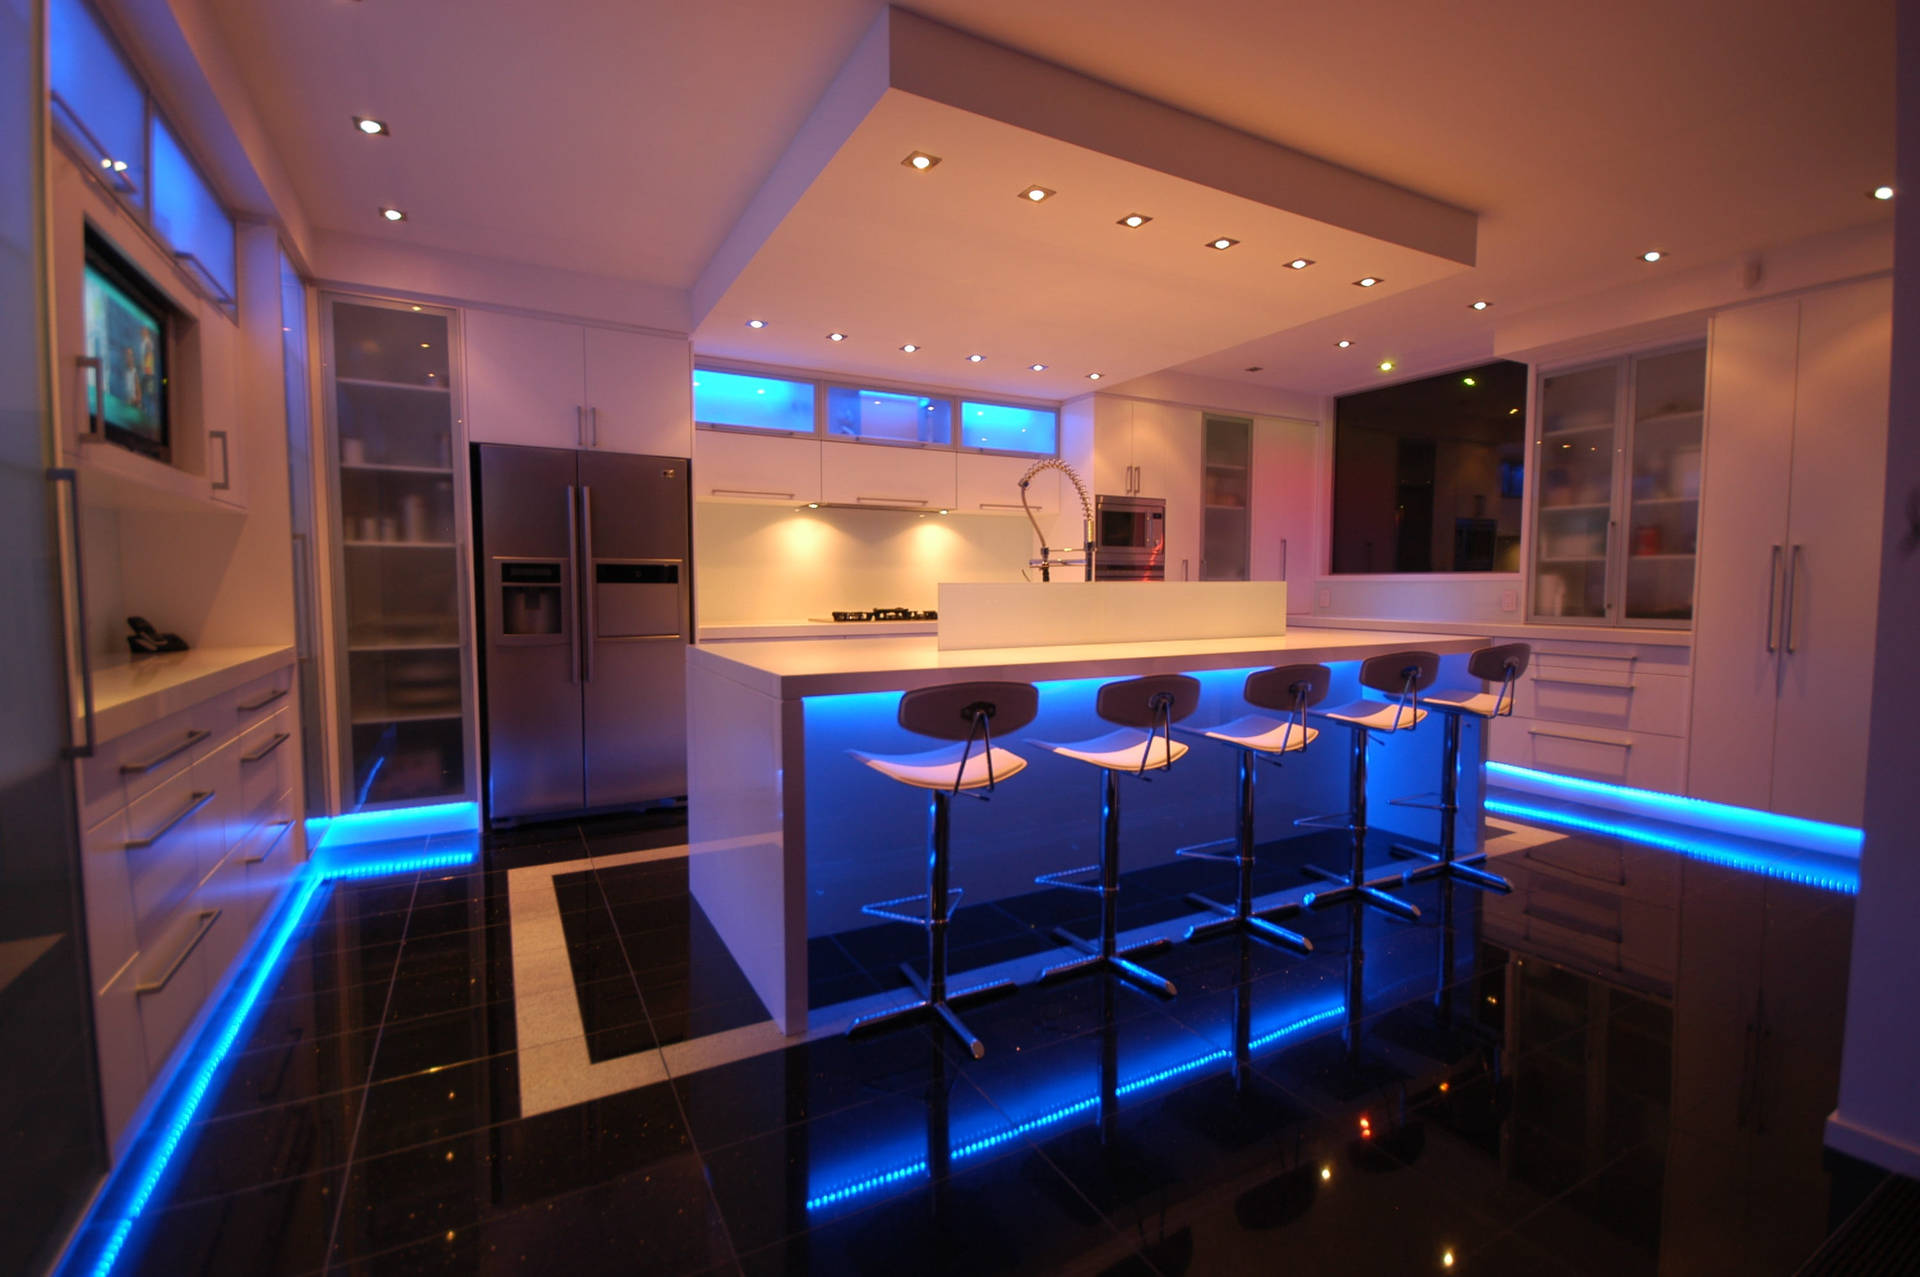 Modern Kitchen Design With Led Lights Wallpaper